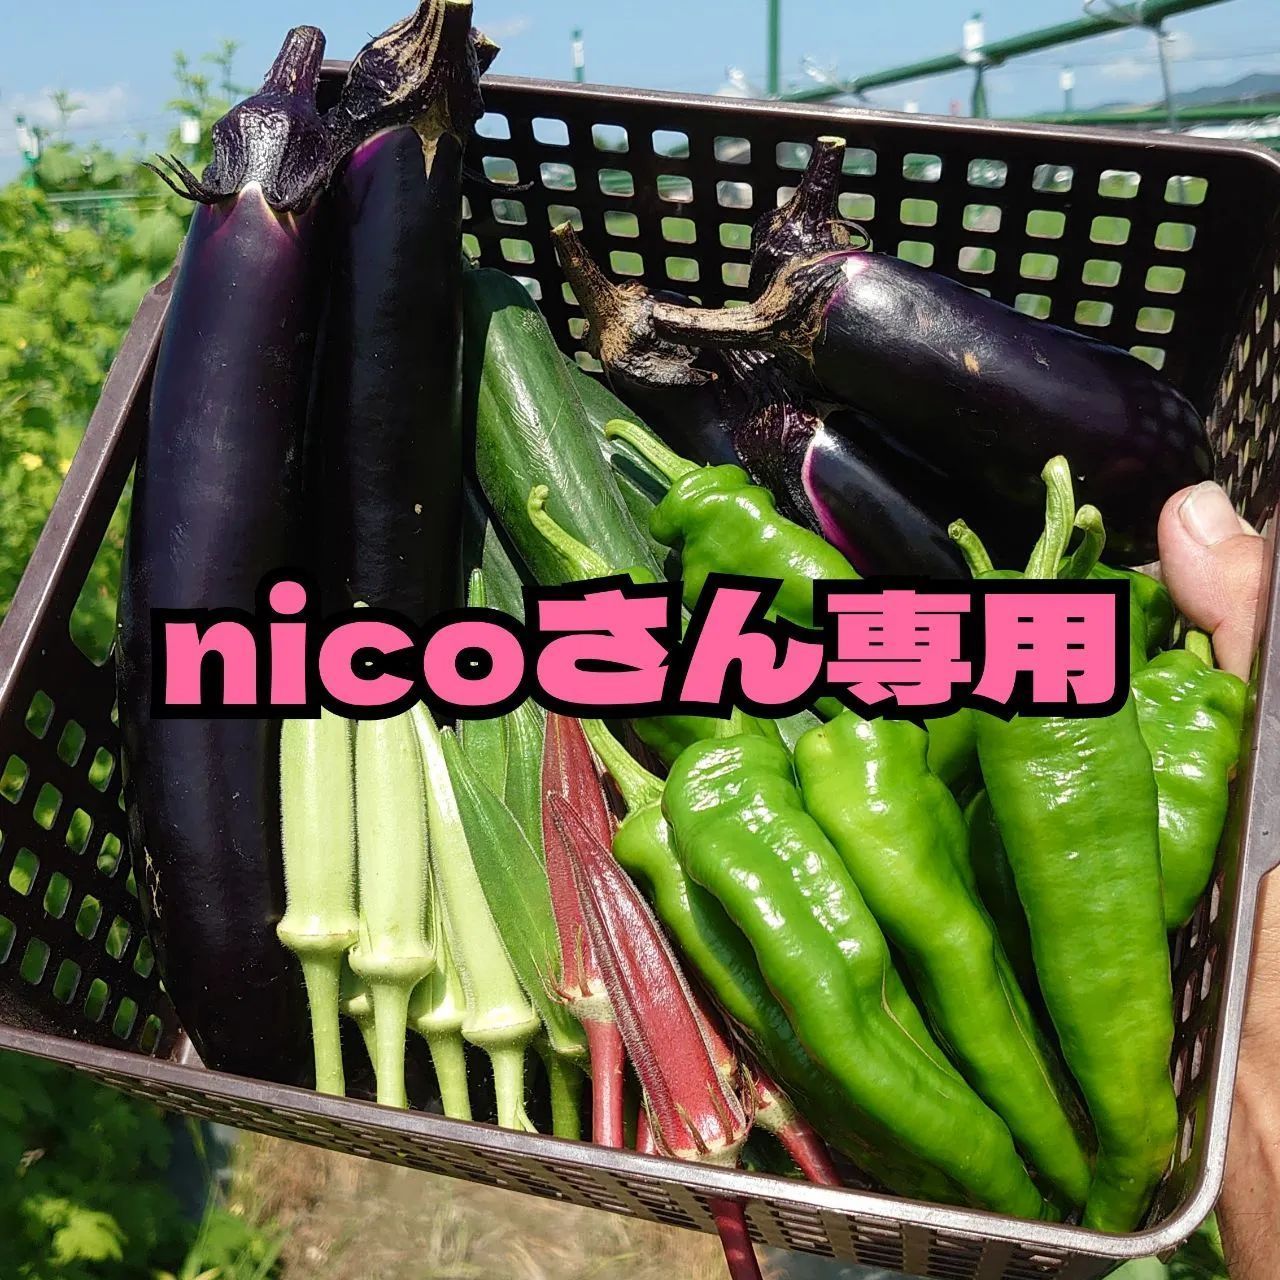 nicoさん専用】野菜セット - メルカリ